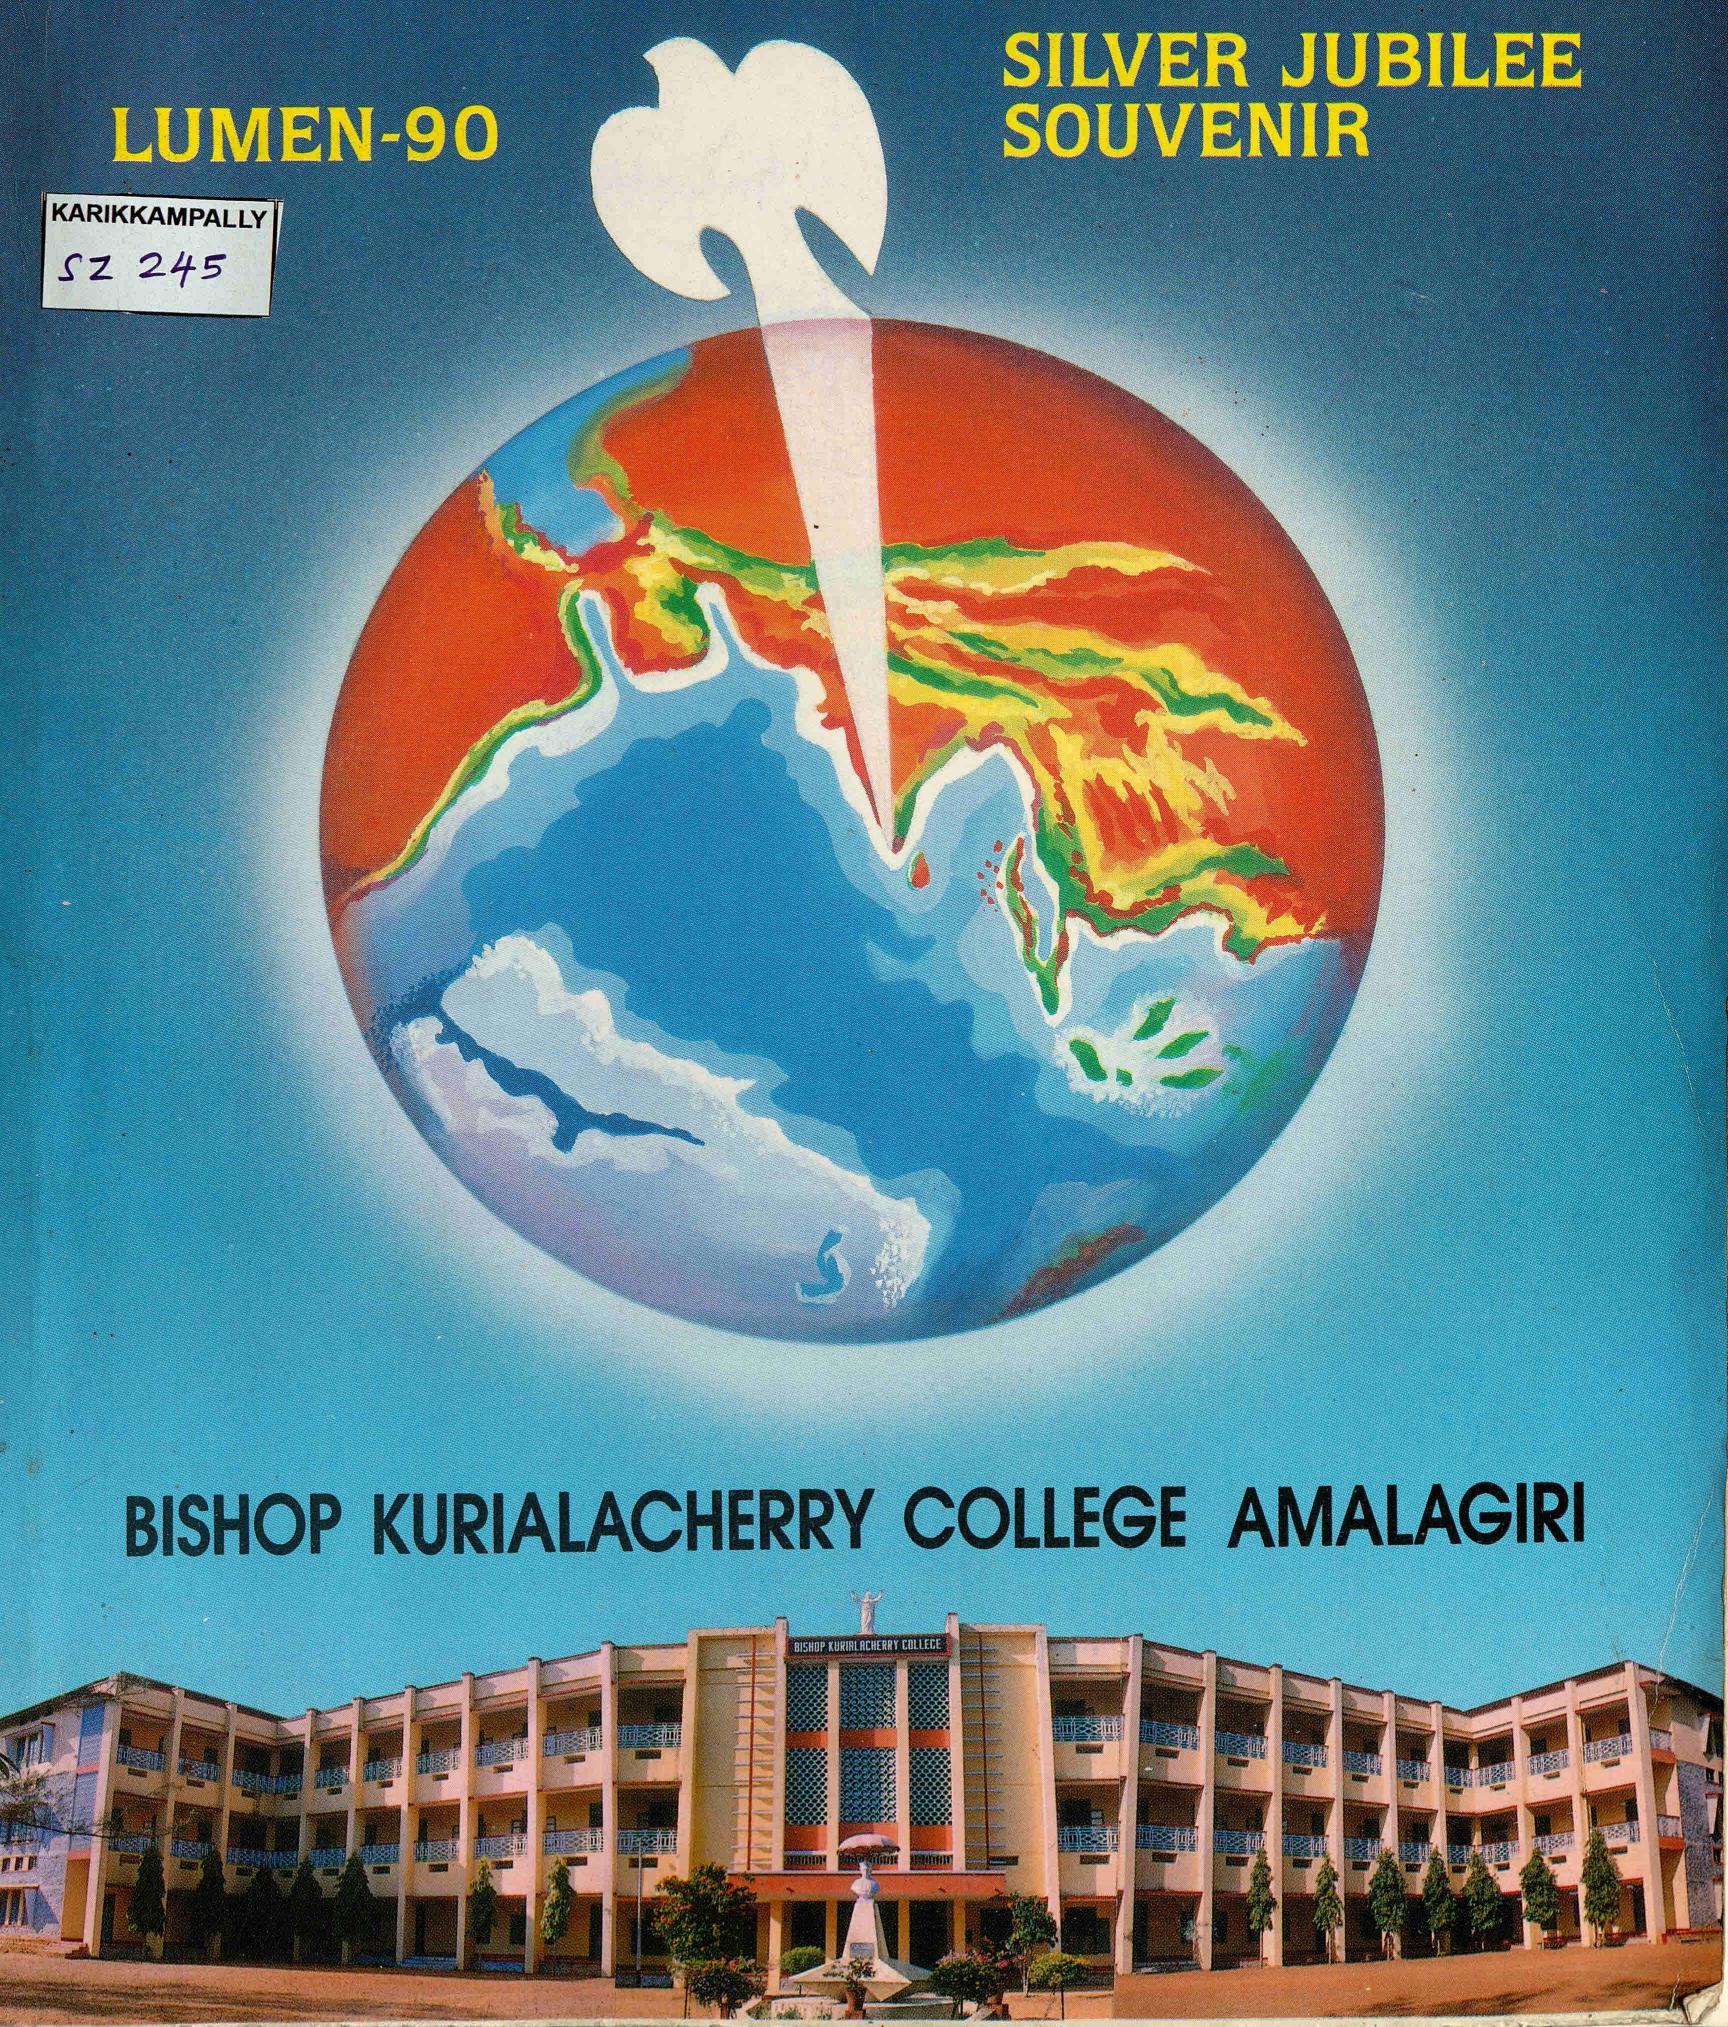 1990 - Bishop Kurialacherry College Amalagiri - Silver Jubilee Souvenir